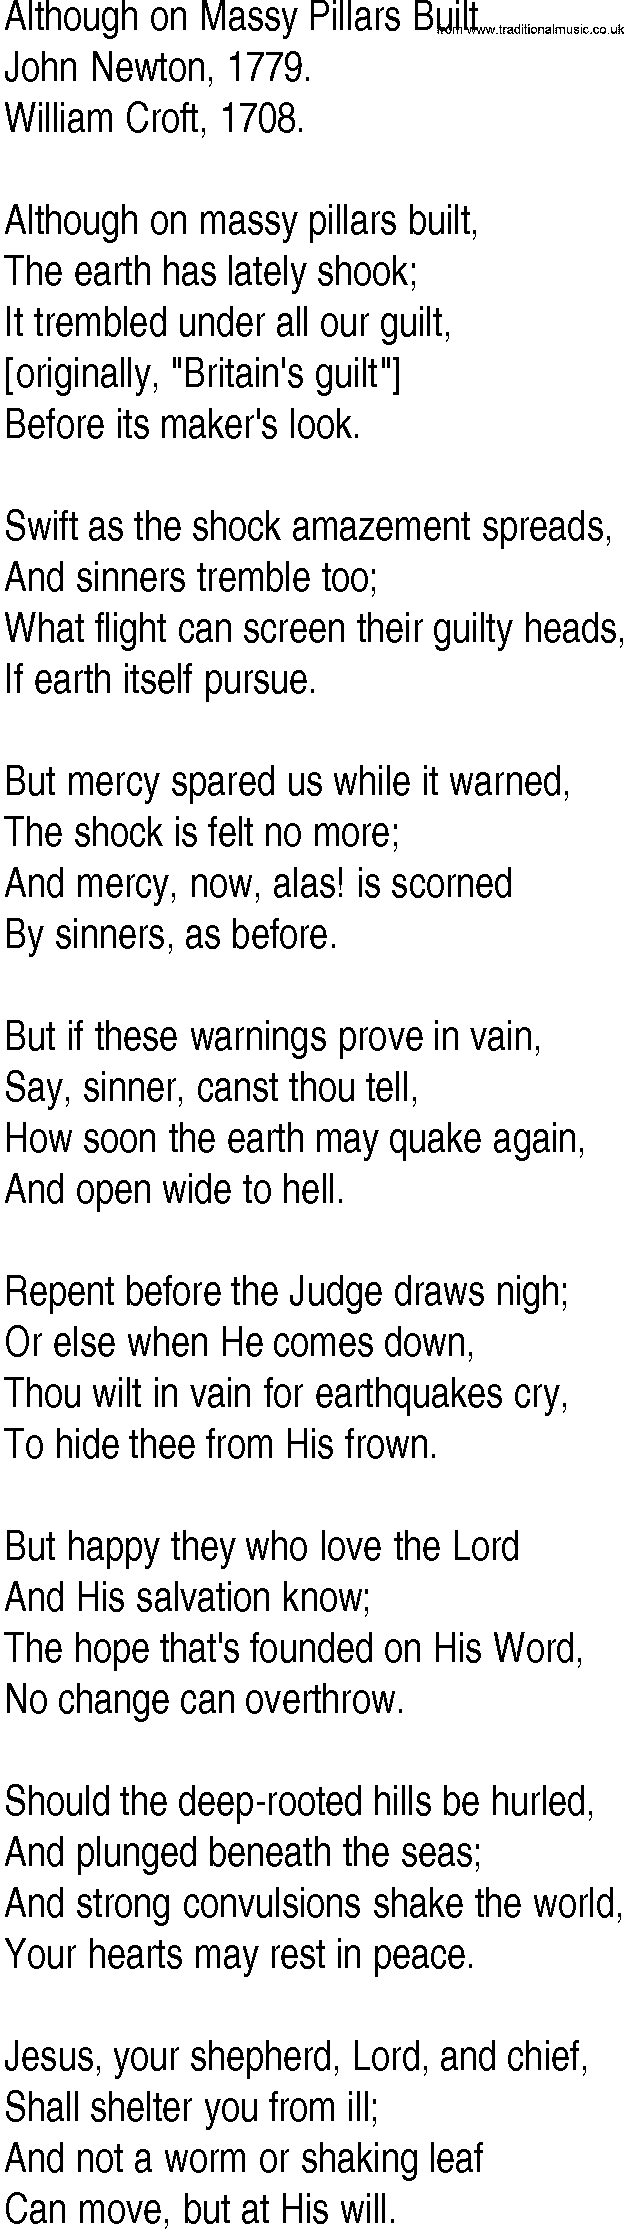 Hymn and Gospel Song: Although on Massy Pillars Built by John Newton lyrics